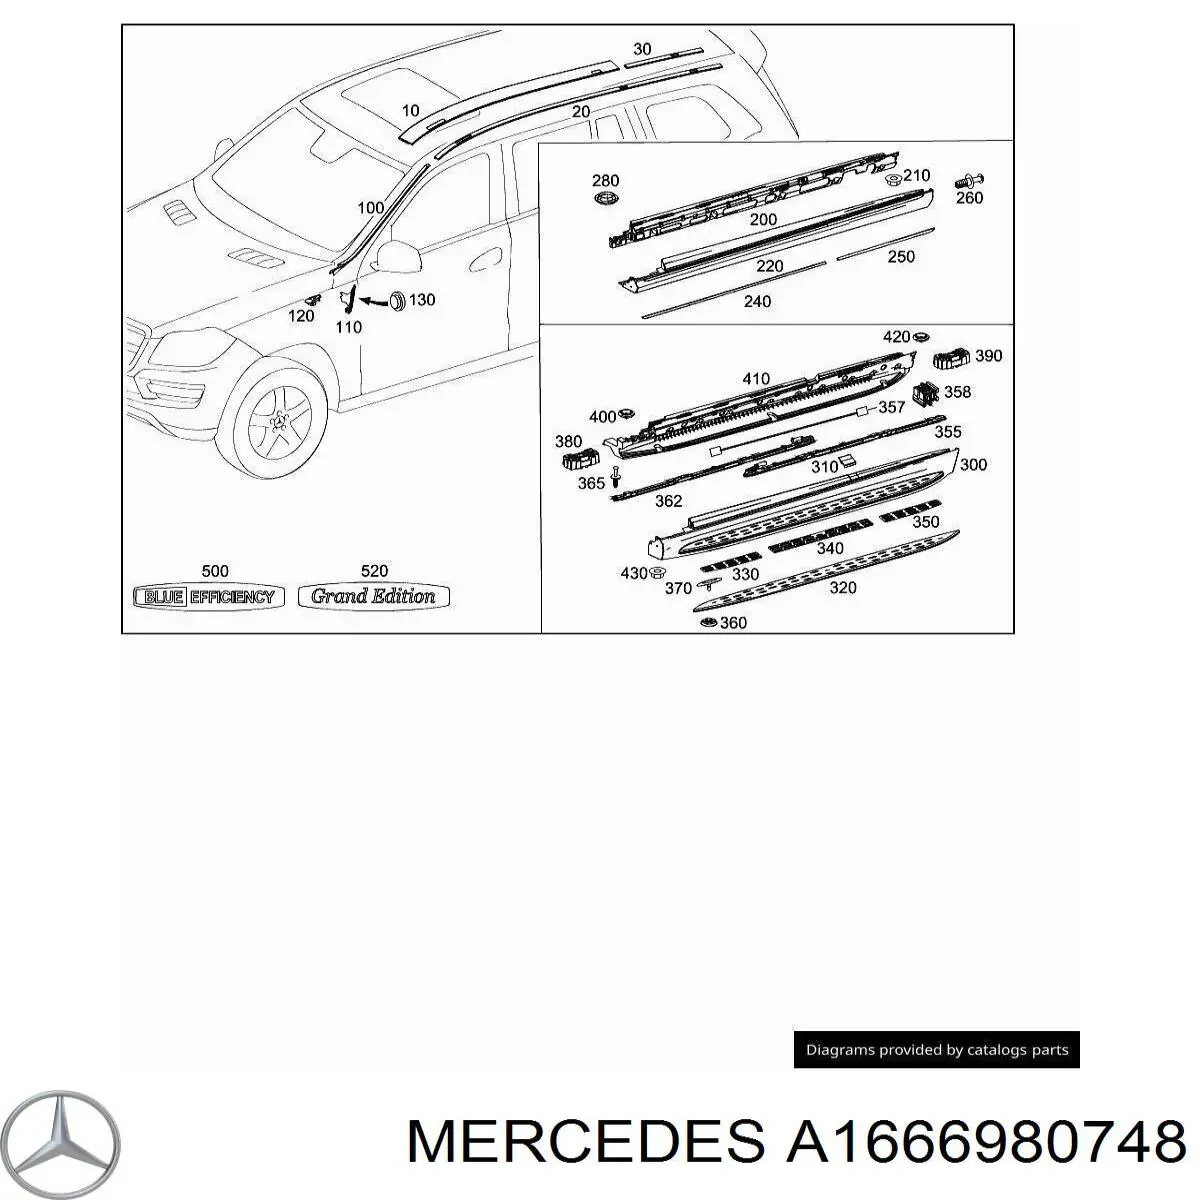 A1666980748 Mercedes 